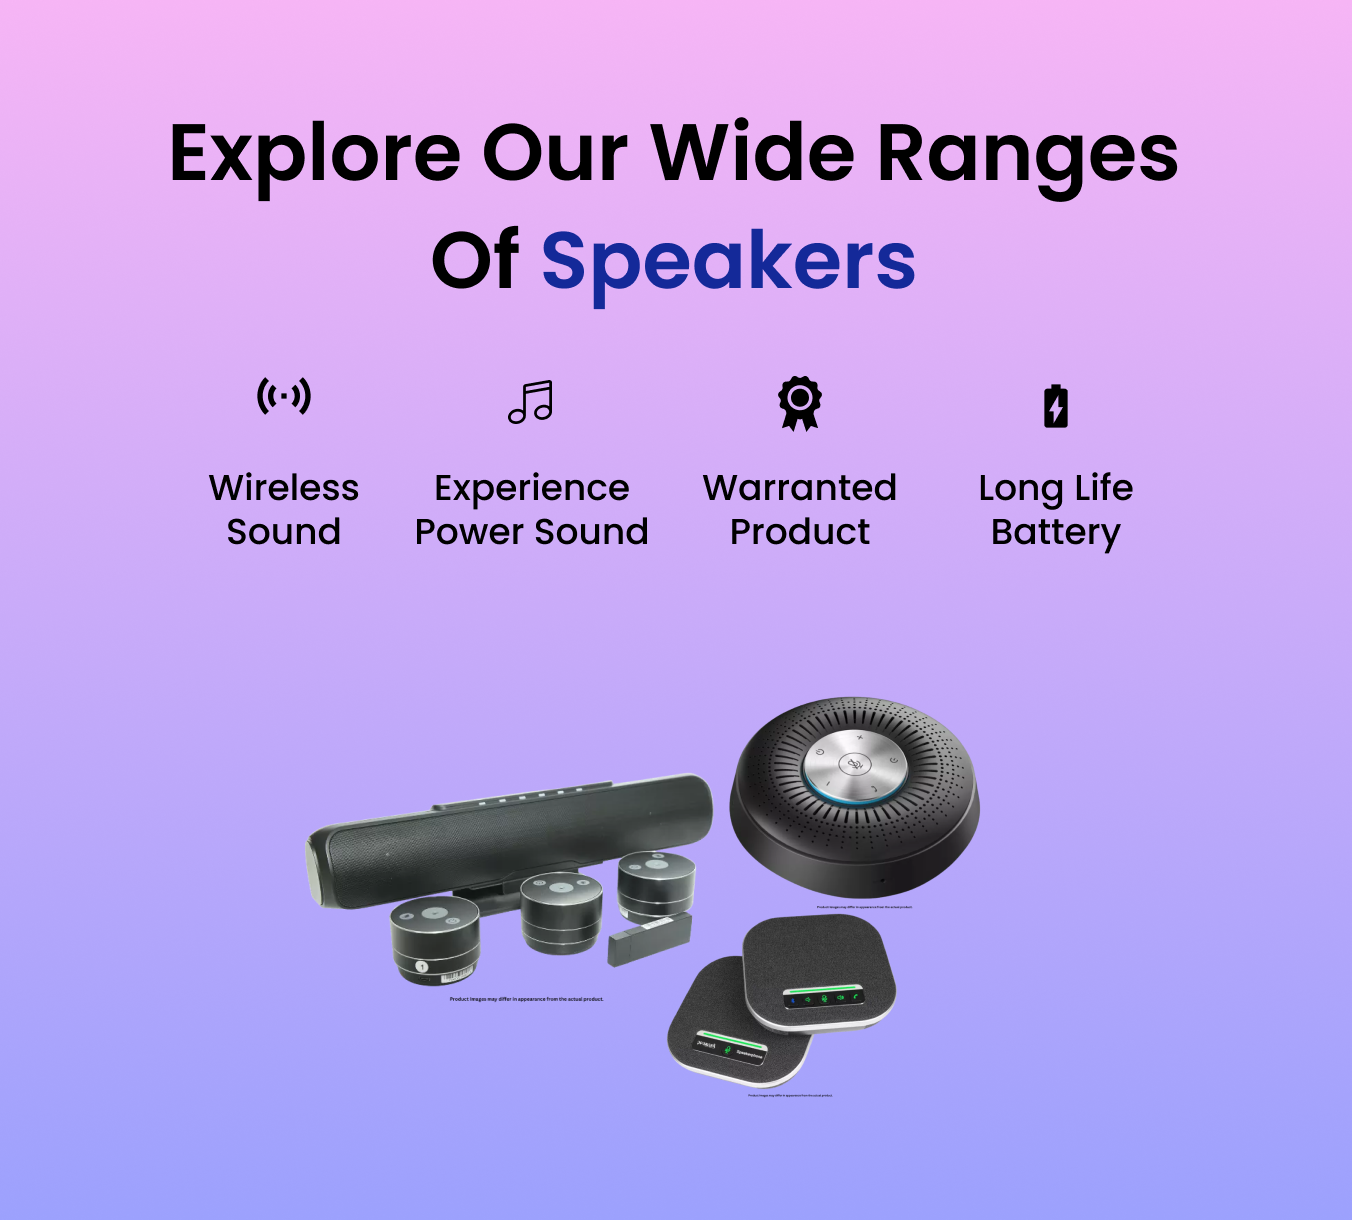 Explore a wide range of speakers